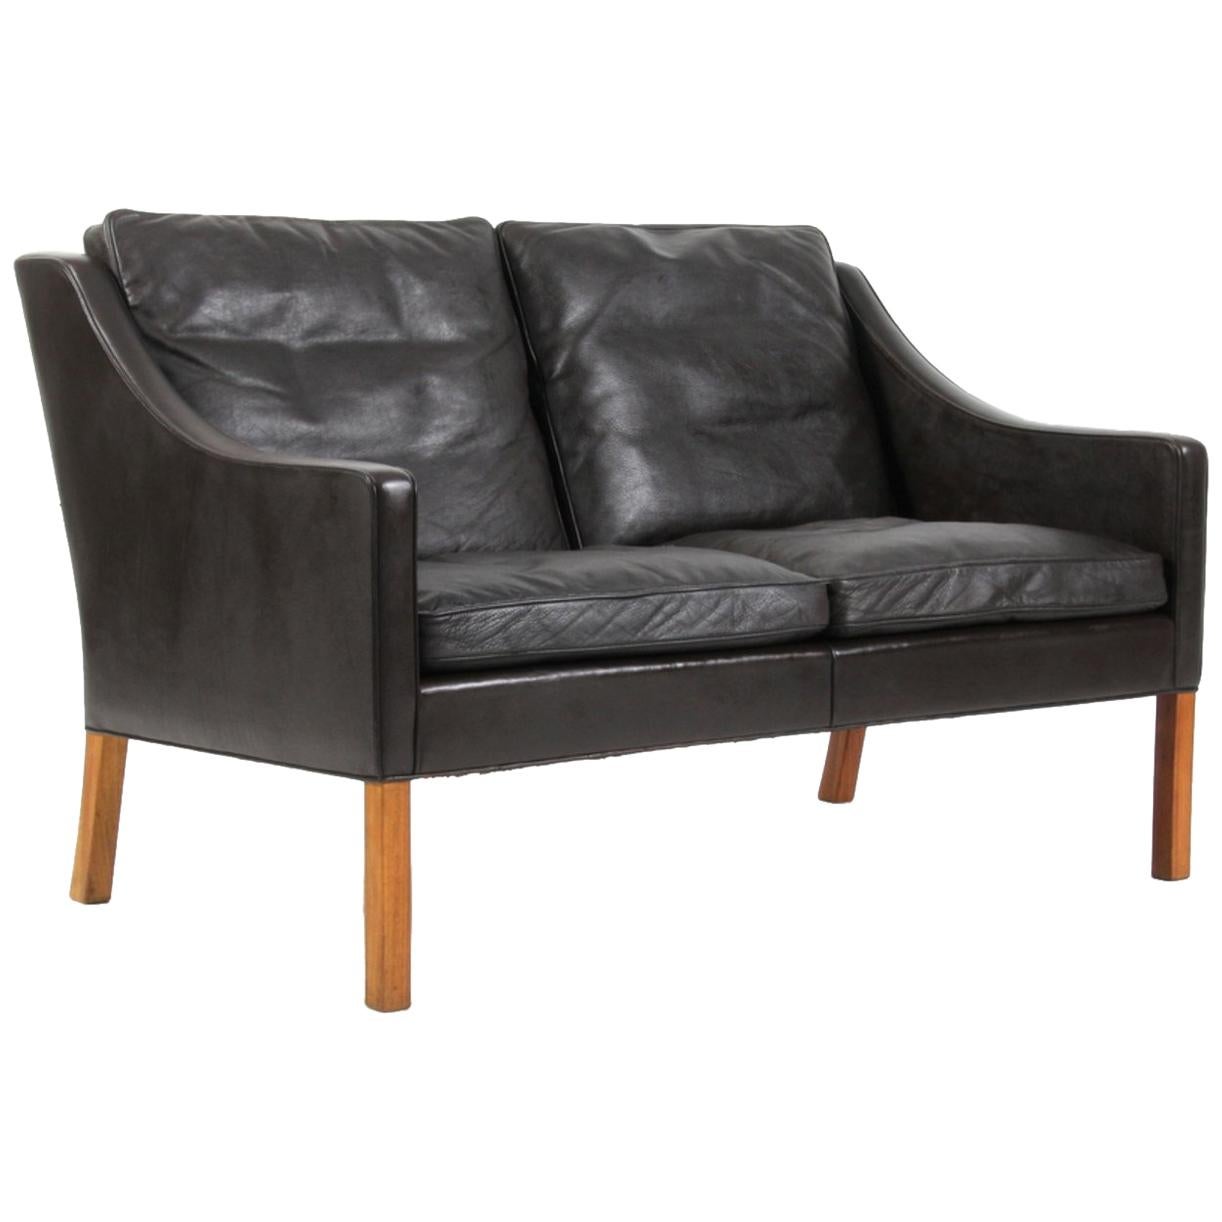 Børge Mogensen Two-Seat Sofa, Model 2208, Original Dark Brown Leather